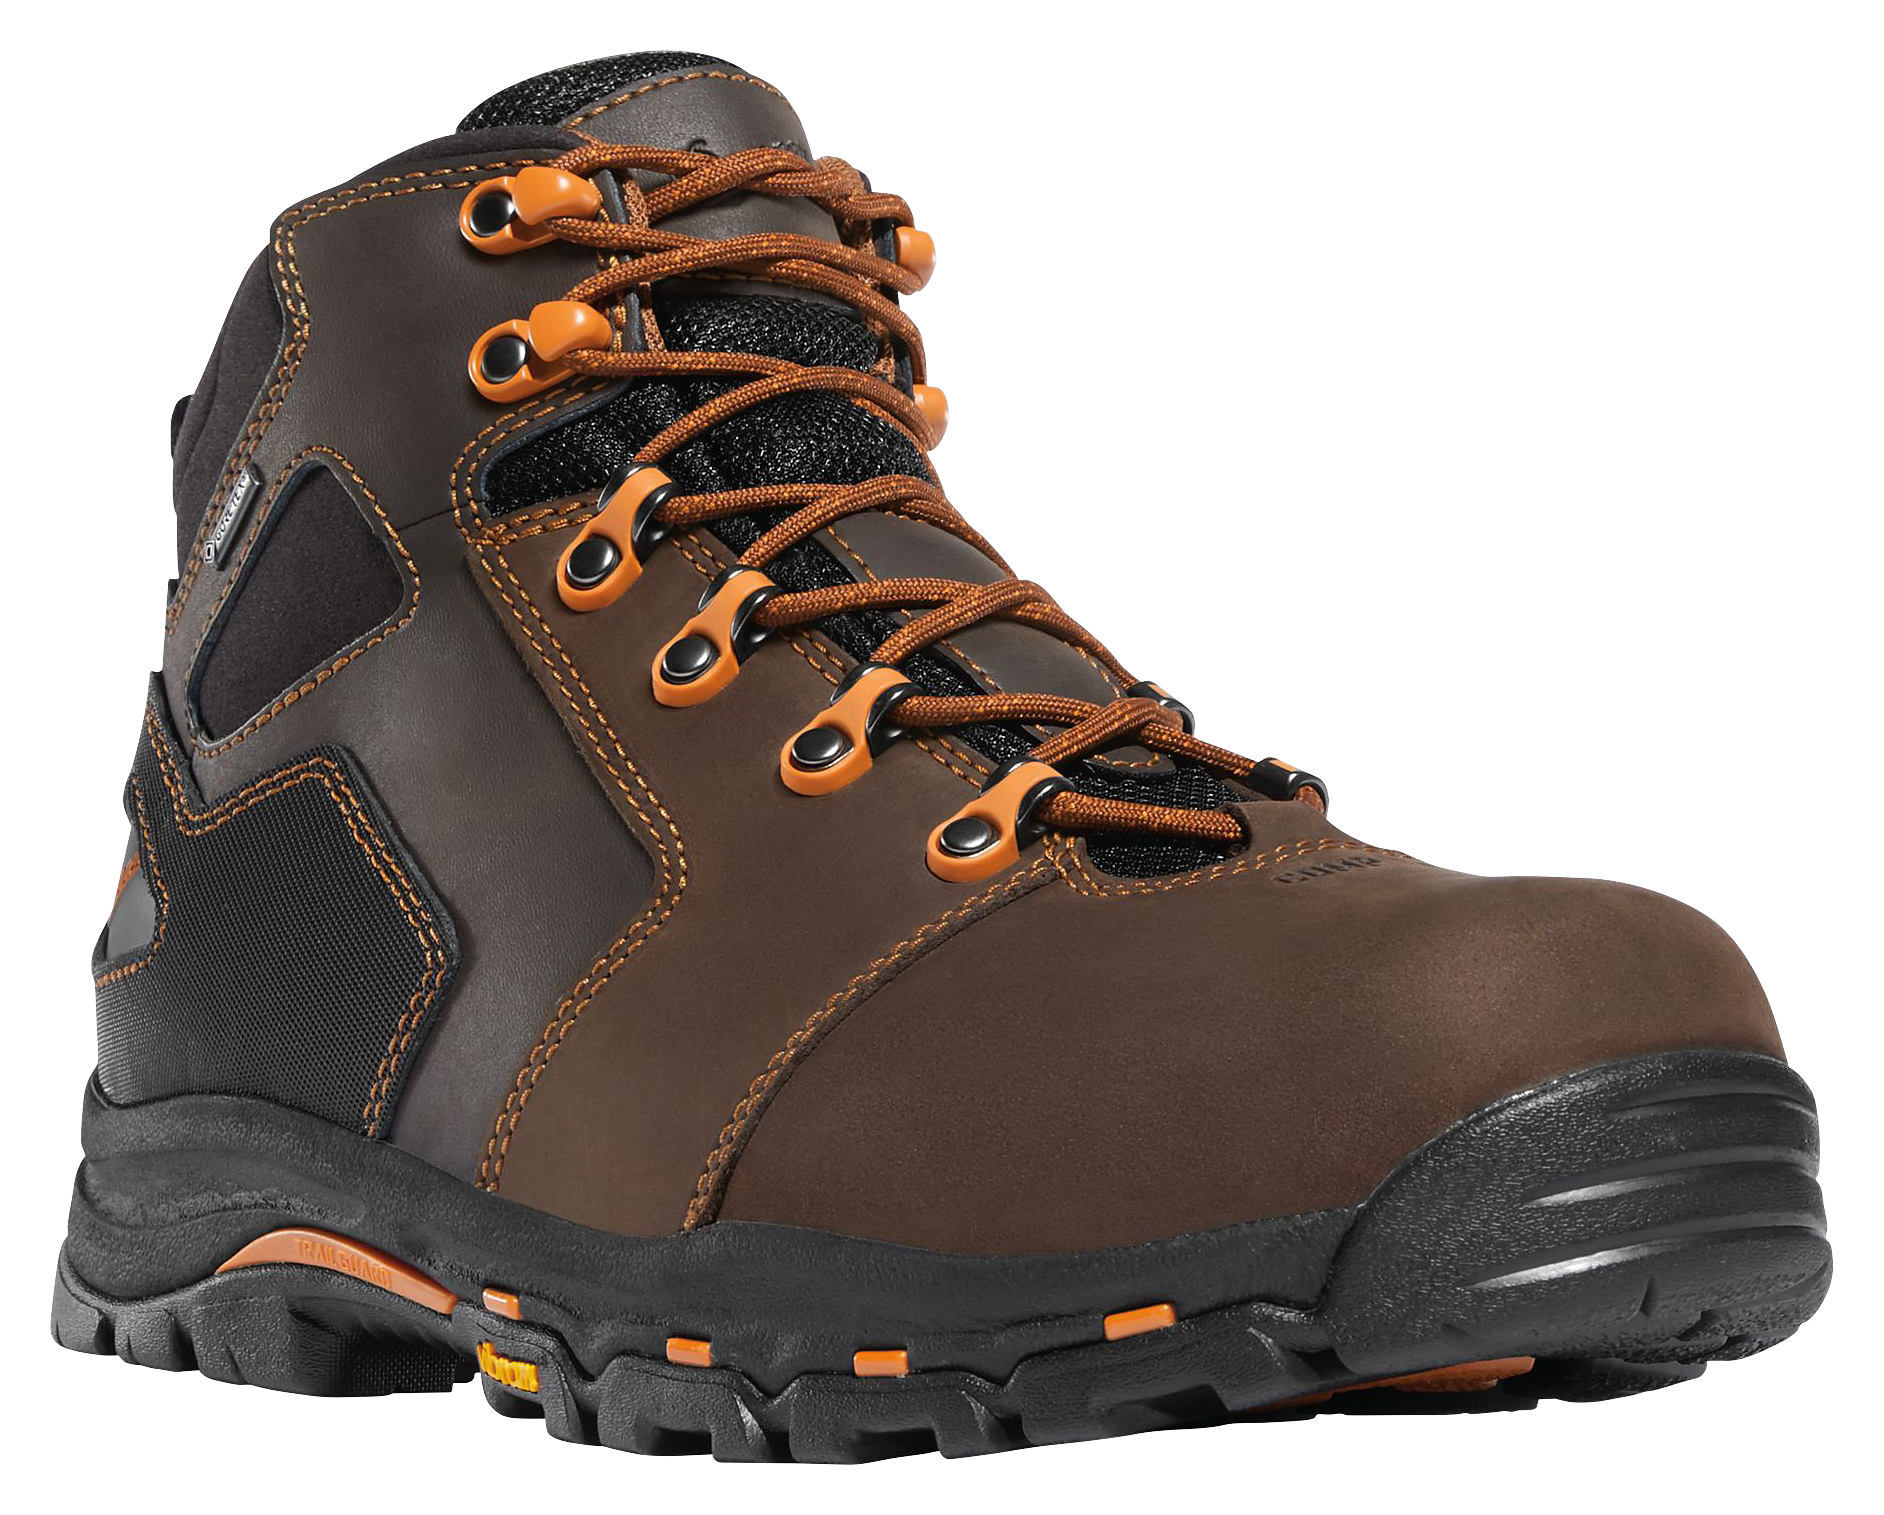 Danner Vicious 4.5'' GORE-TEX EH Work Boots for Men - Brown/Orange - 11M